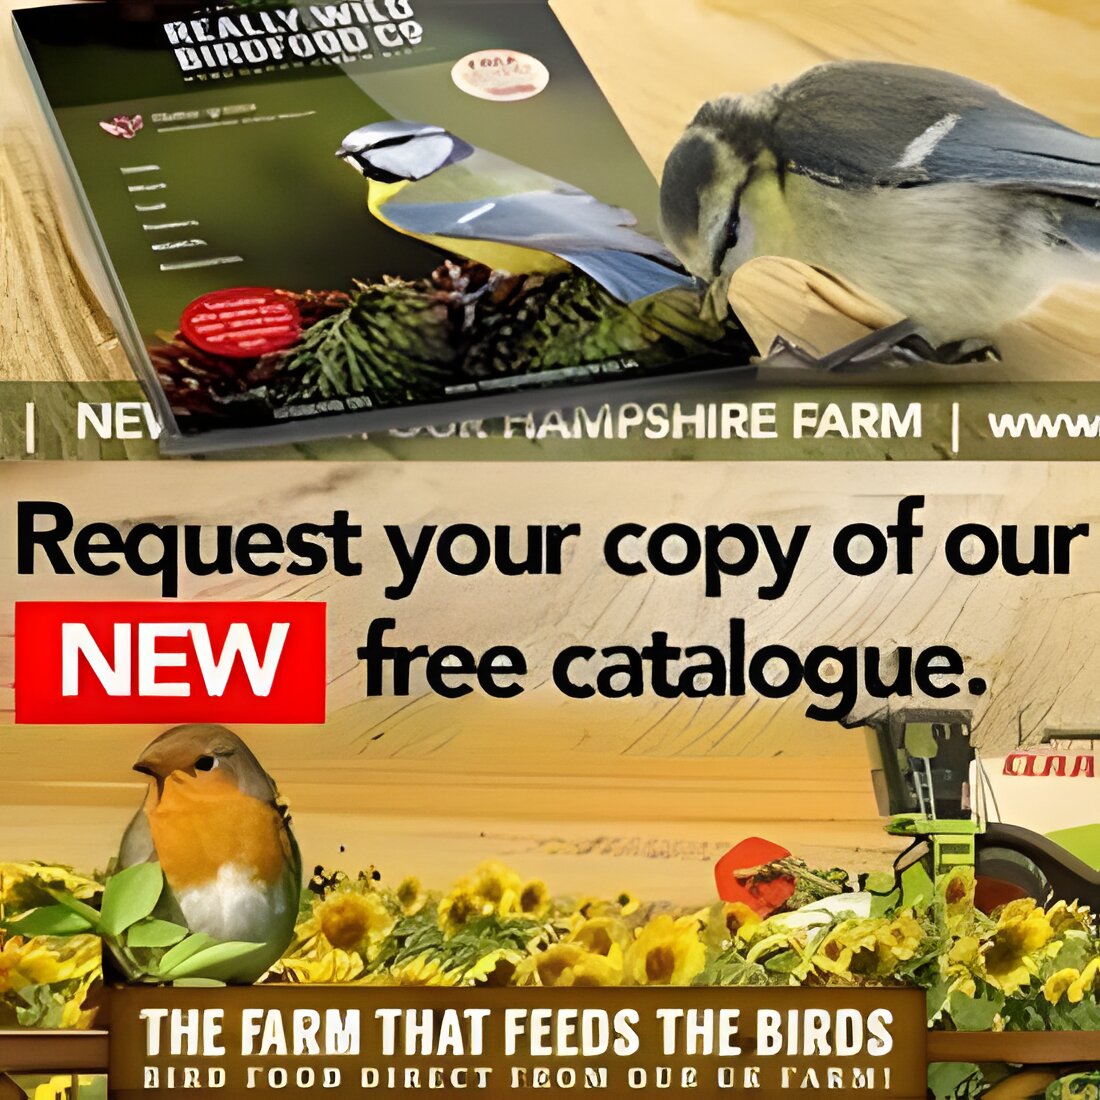 Free Really Wild BirdFood Catalogue